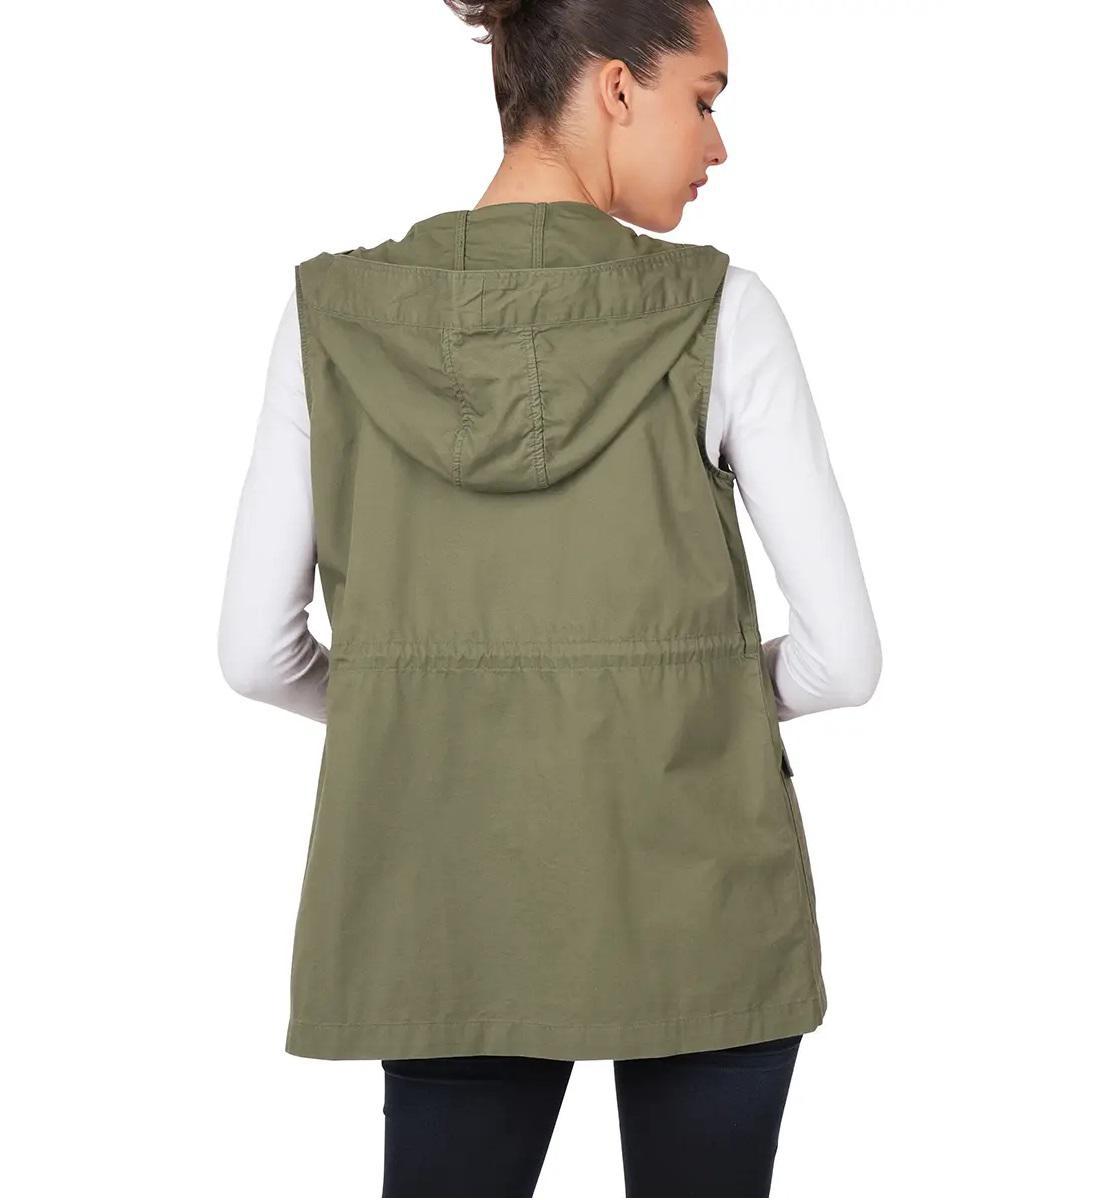 Women's Drawstring Waist Military Hoodie Vest | Army Green